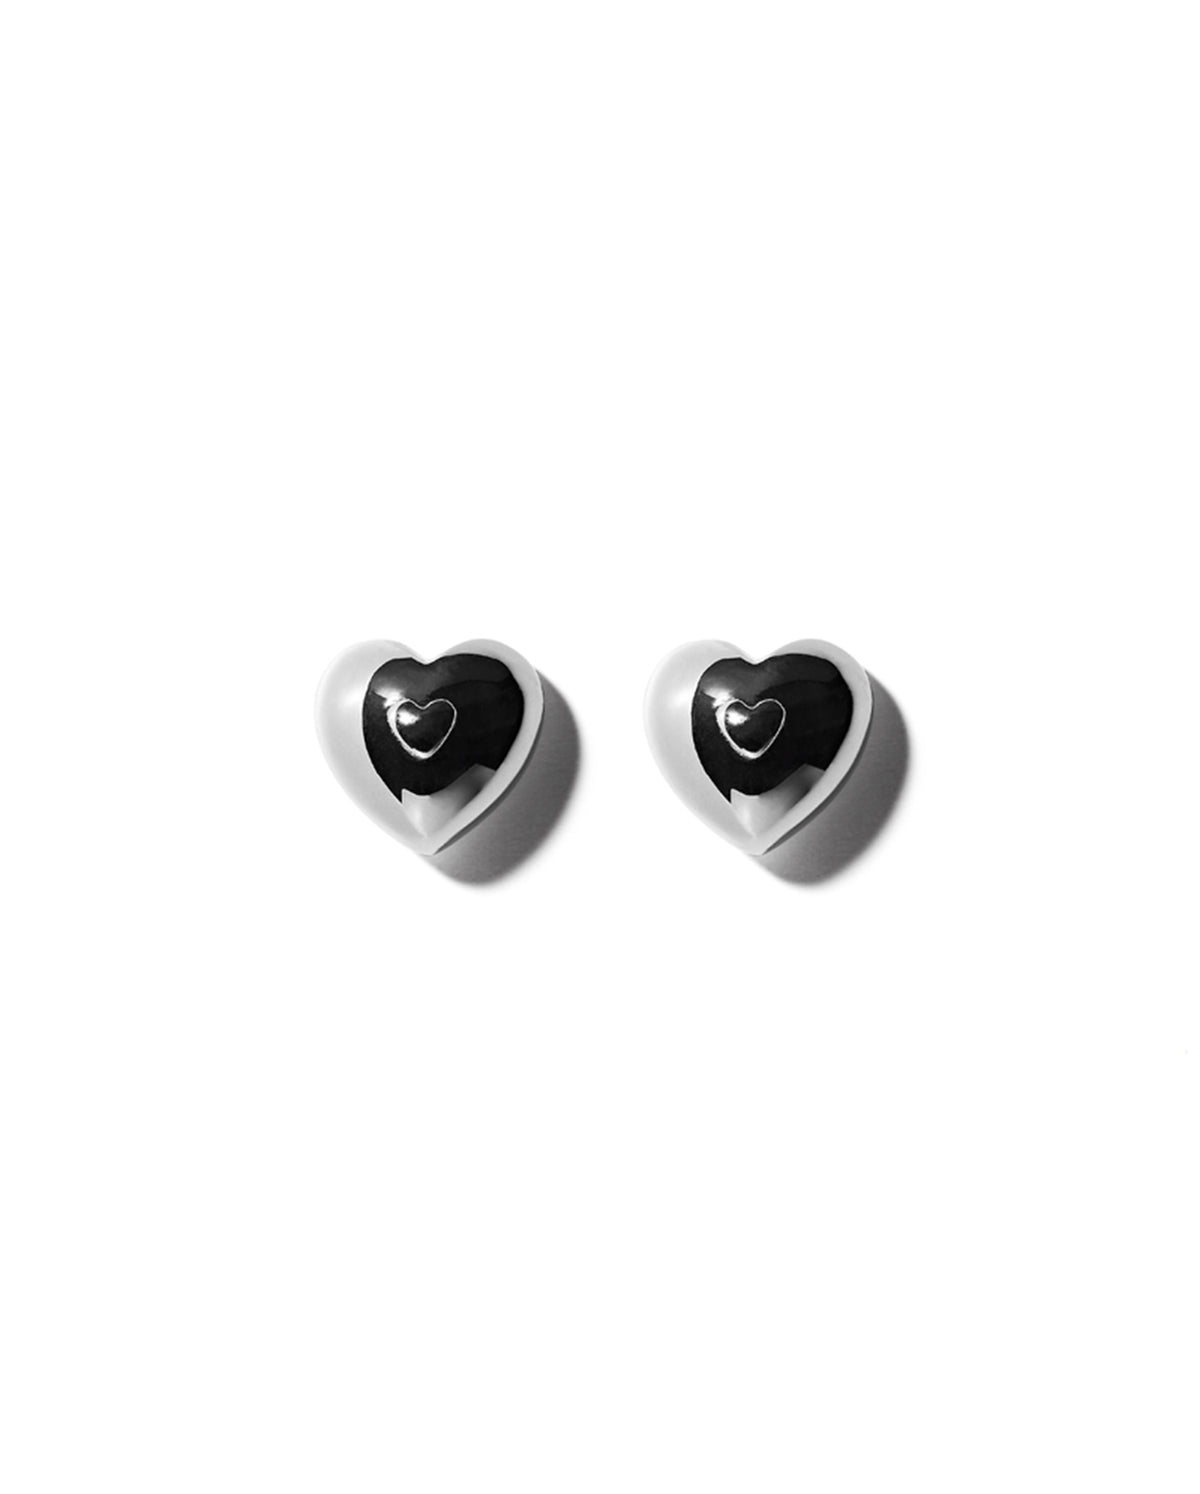 Very Vintage Silver Heart Earrings